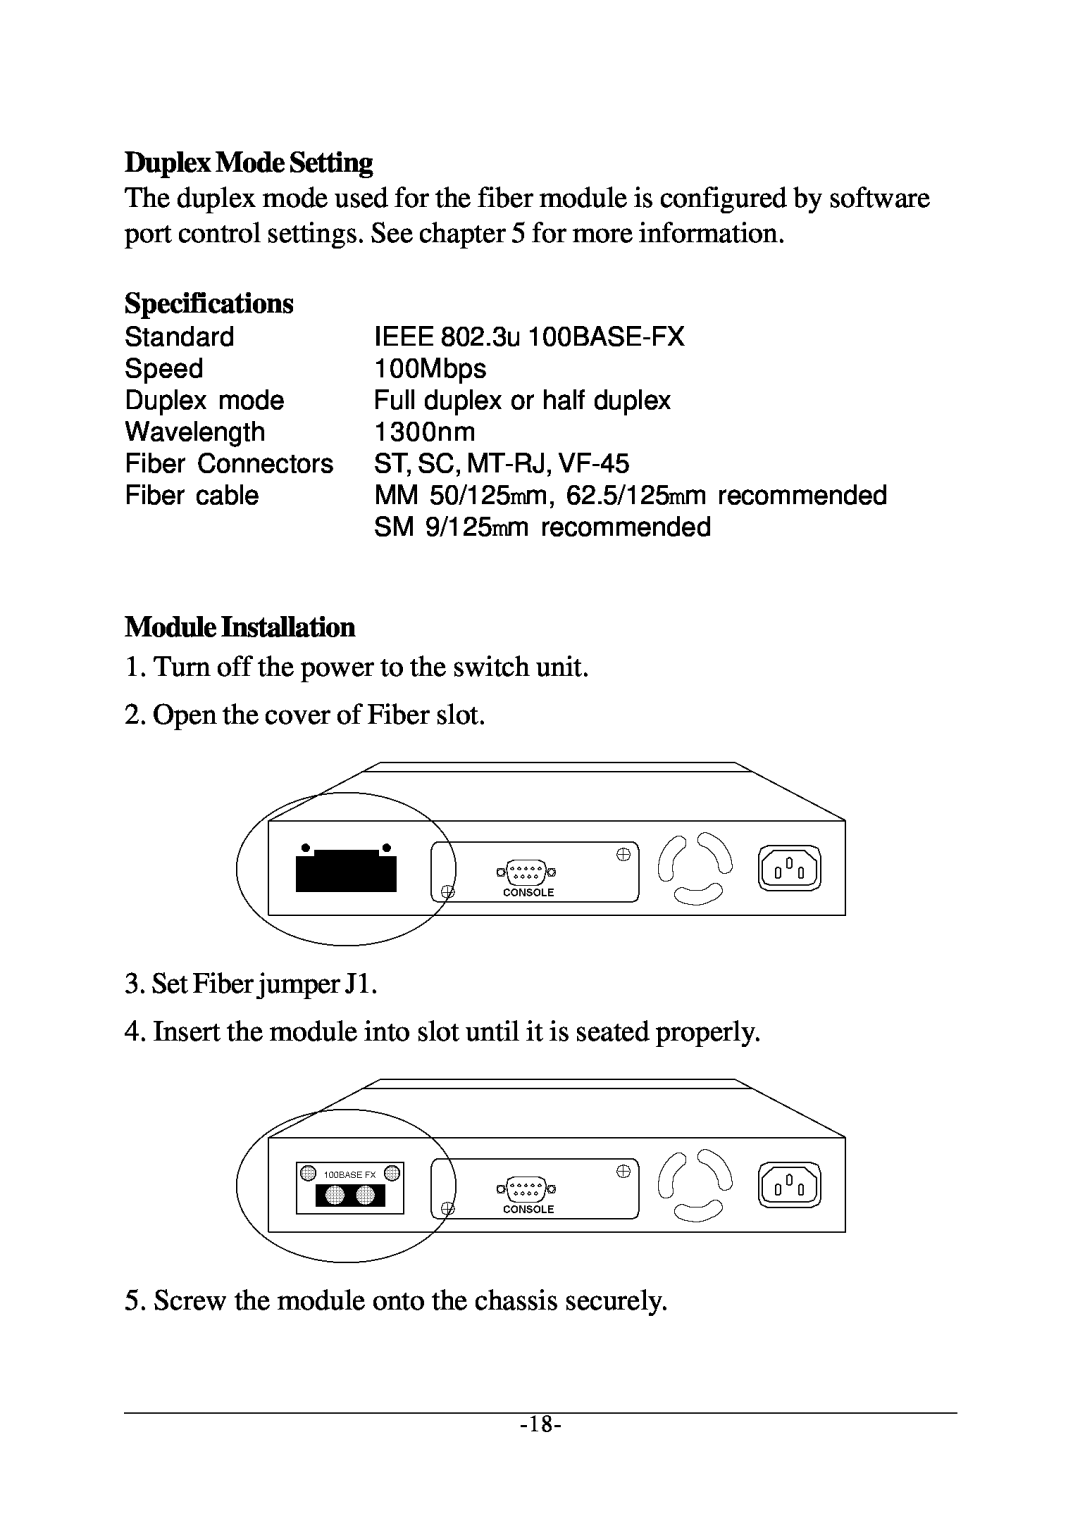 Xerox KS-801 operation manual Duplex Mode Setting, Specifications, Module Installation 